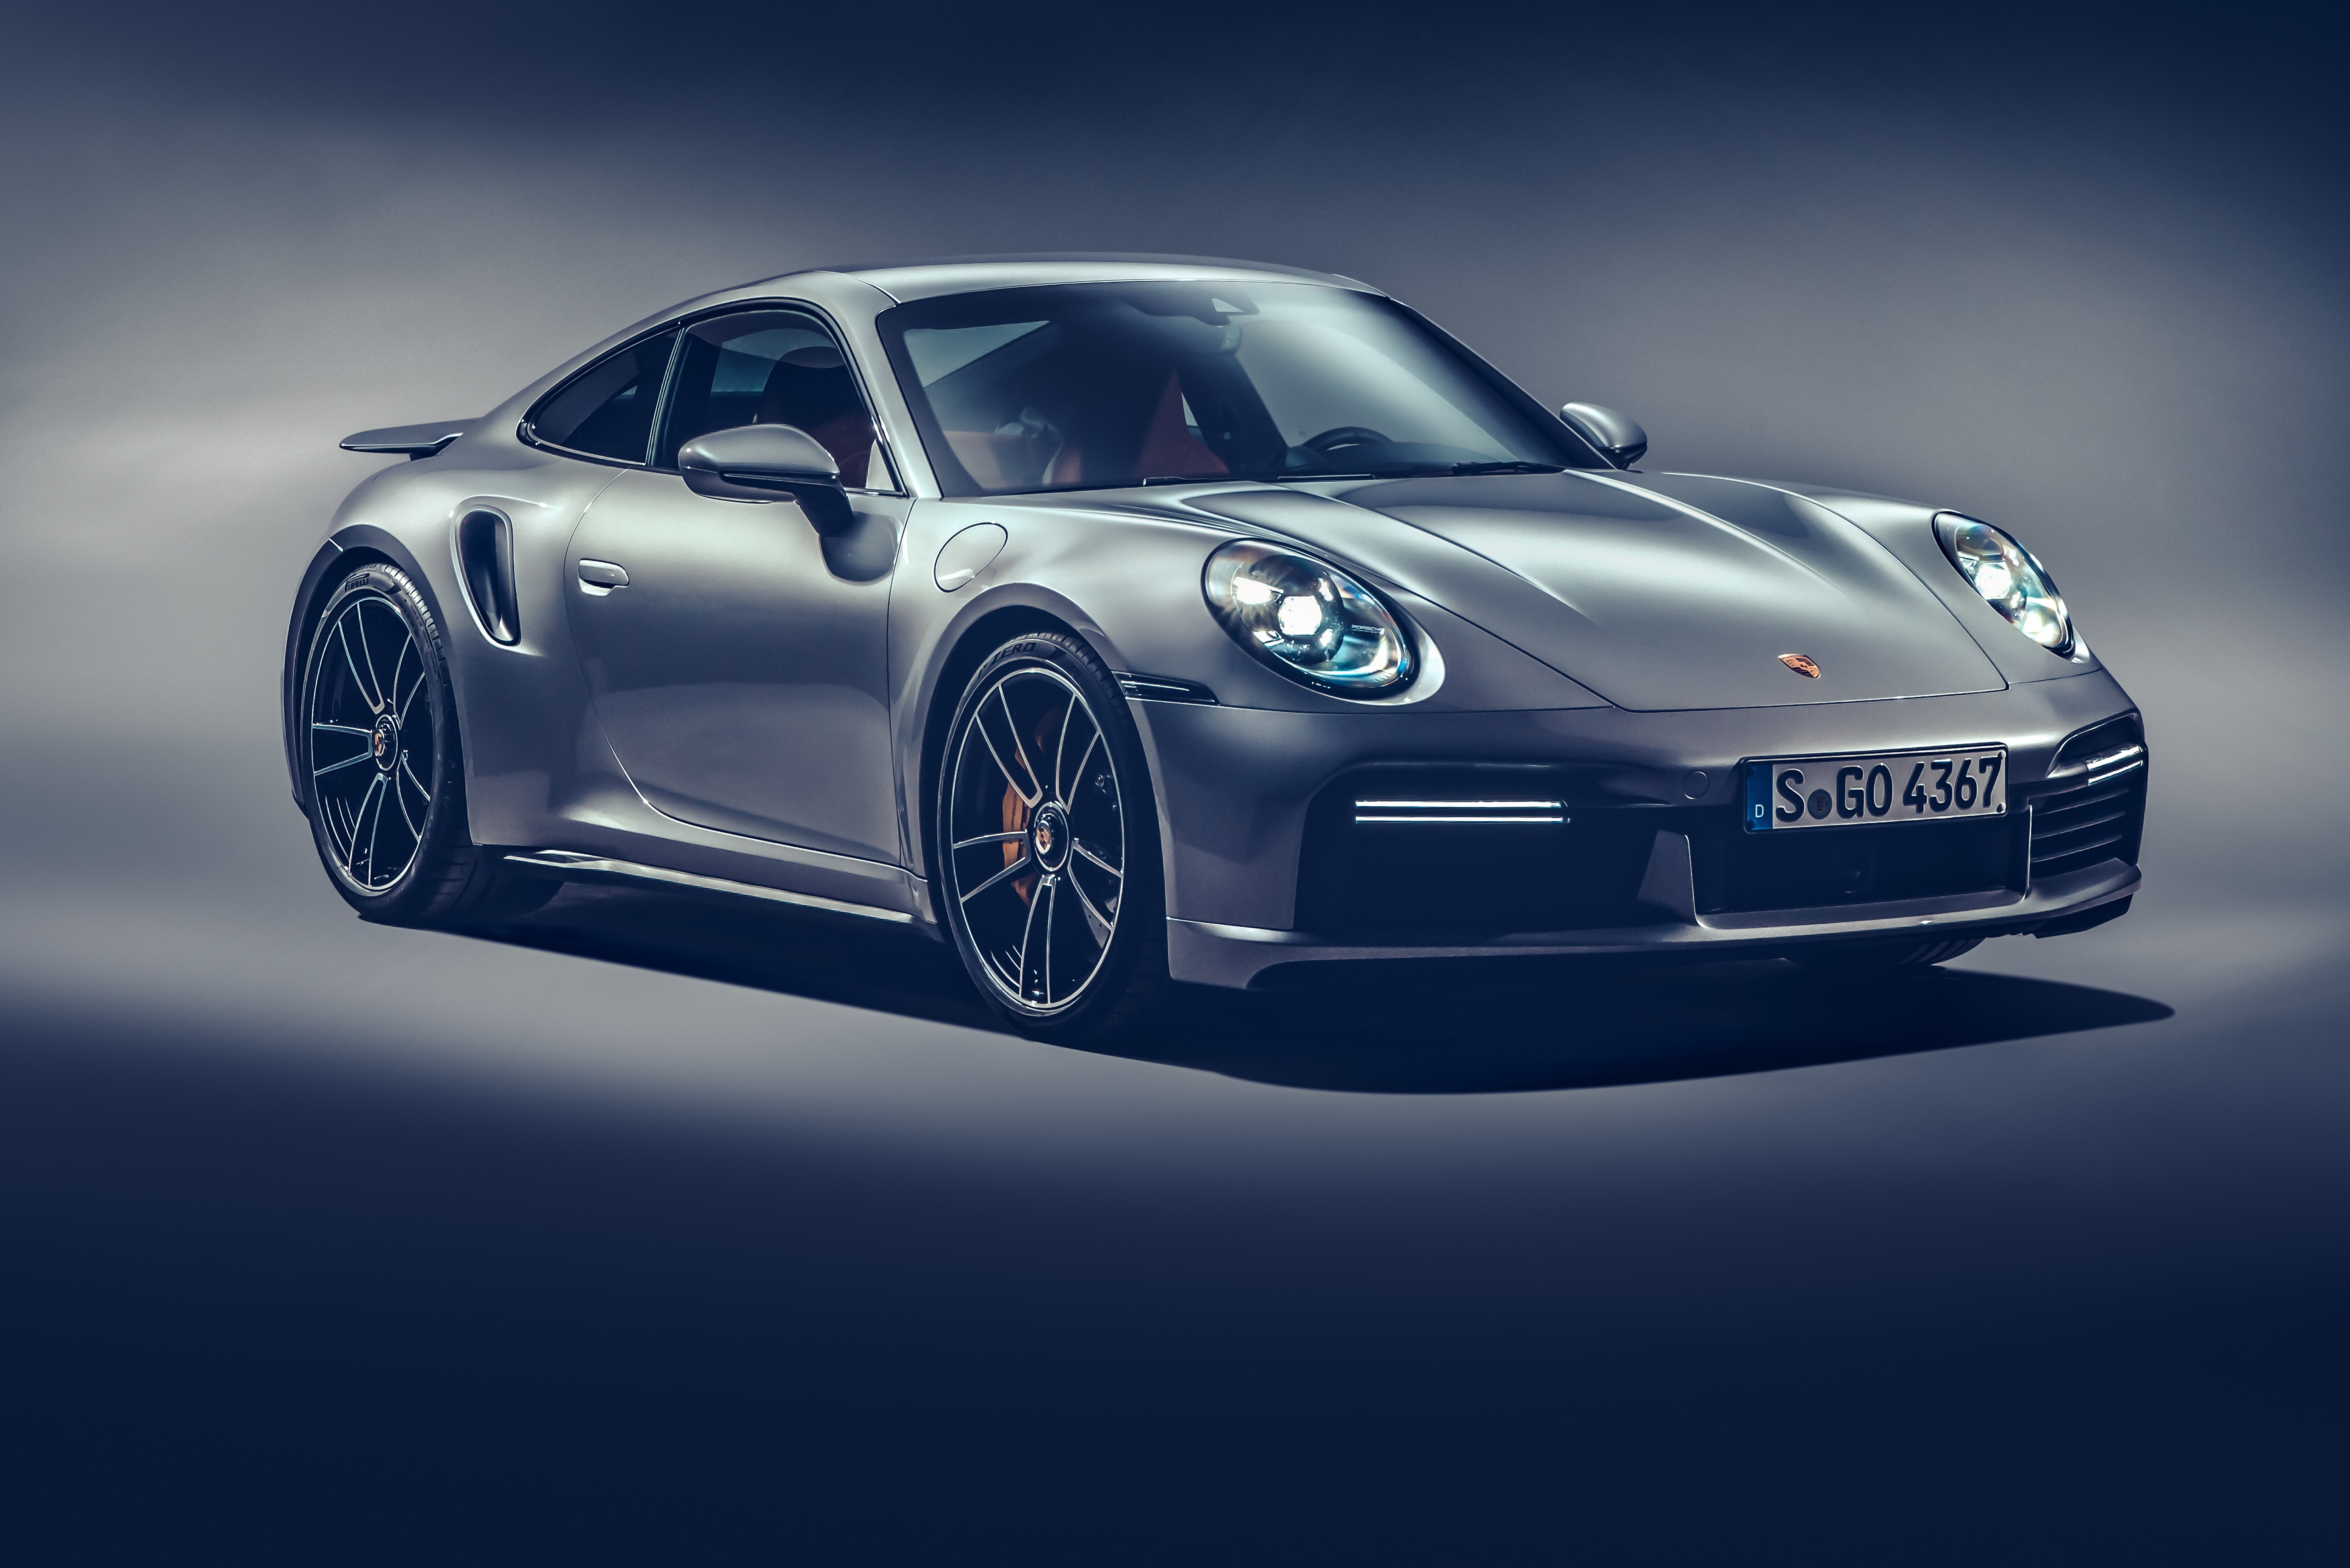 Porsche 911 turbo s: Купить Porsche 911 Turbo S, невысокие цены на Порше 911 Turbo S на сайте Авто.ру